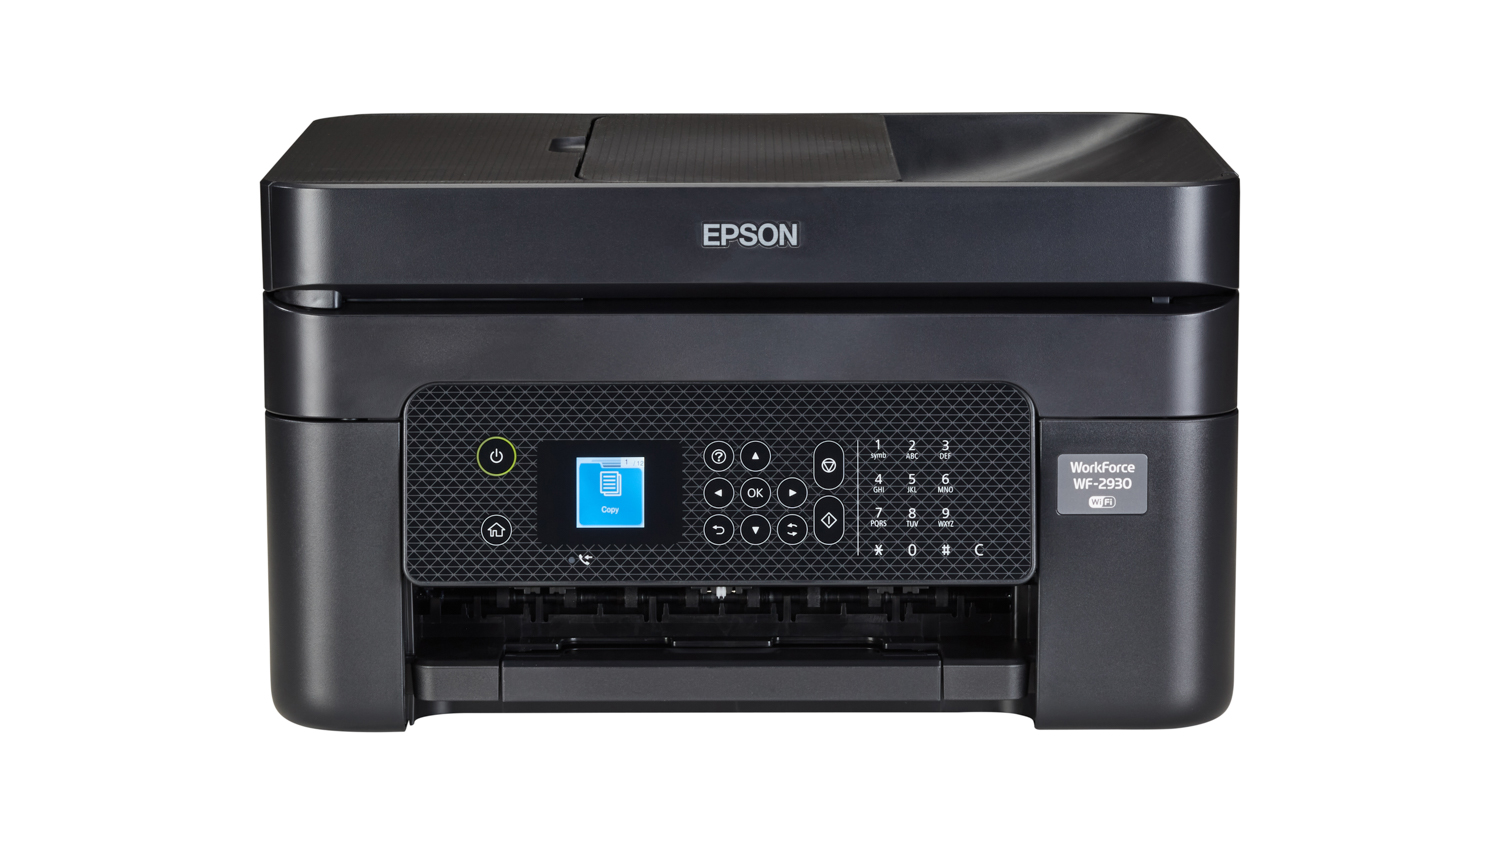 Epson Workforce Wf 2930 Review Printer Choice 0681